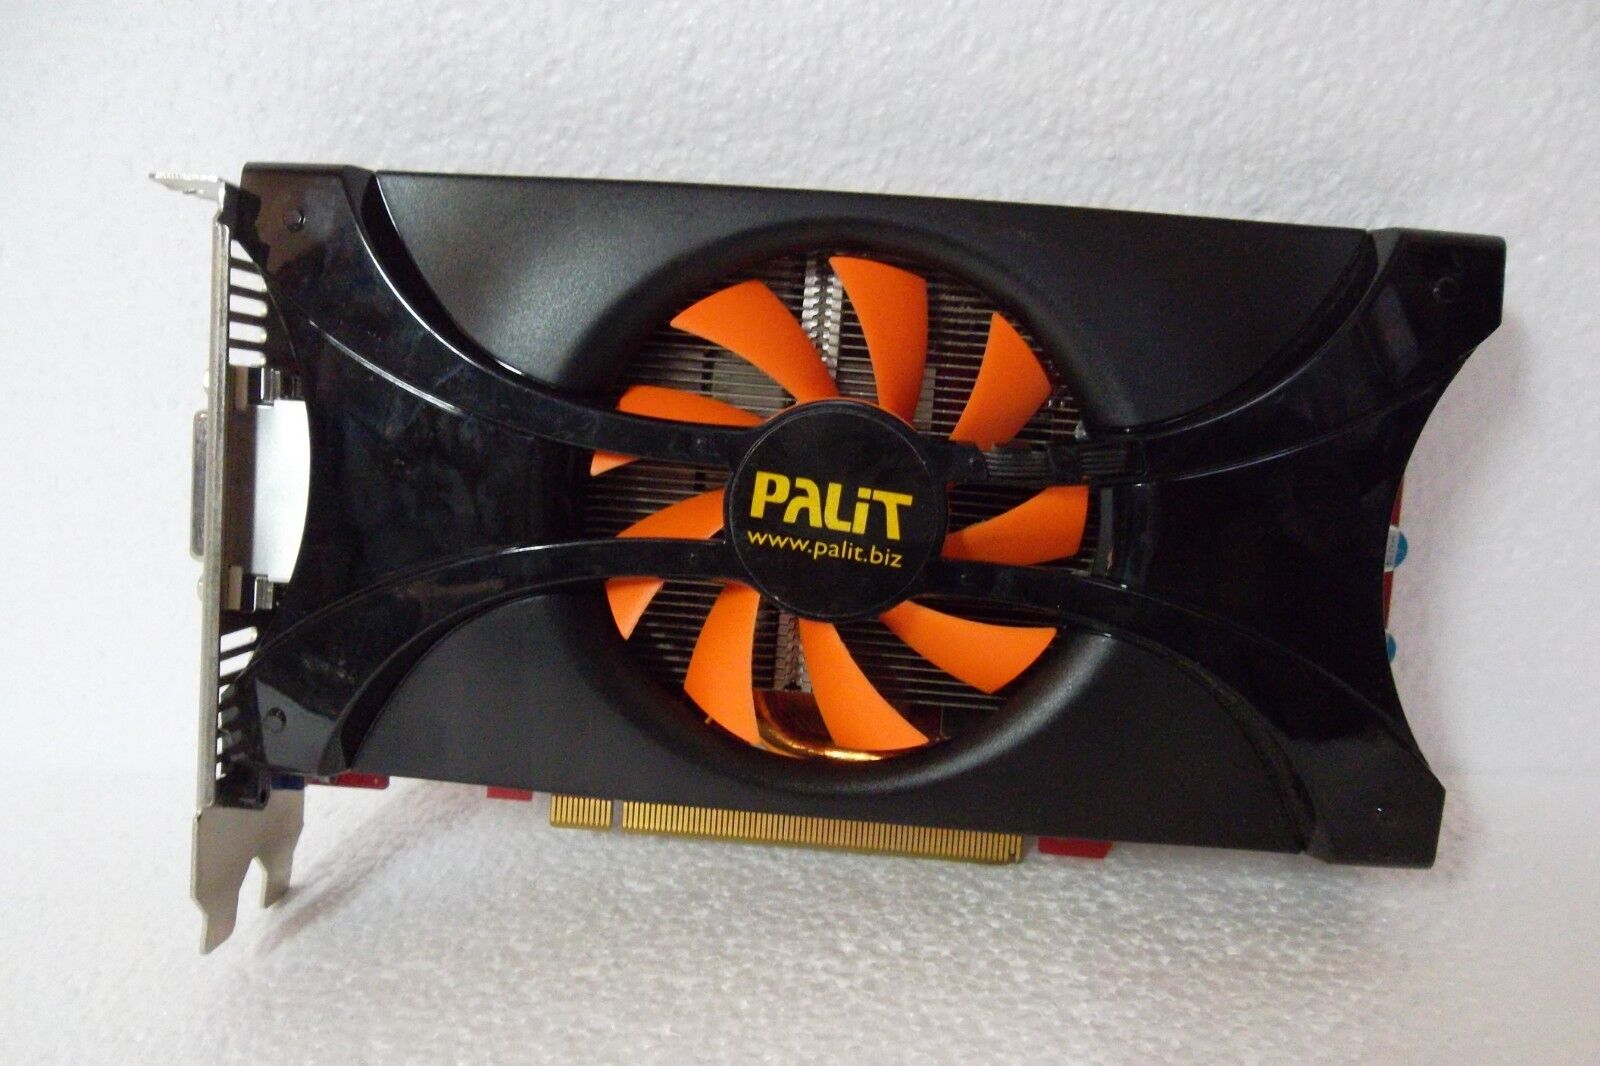 Palit GeForce GTX 460 Graphic Card PCIe 2.0 1GB VGA DVI HDMI NE5X460HF1102-N1040